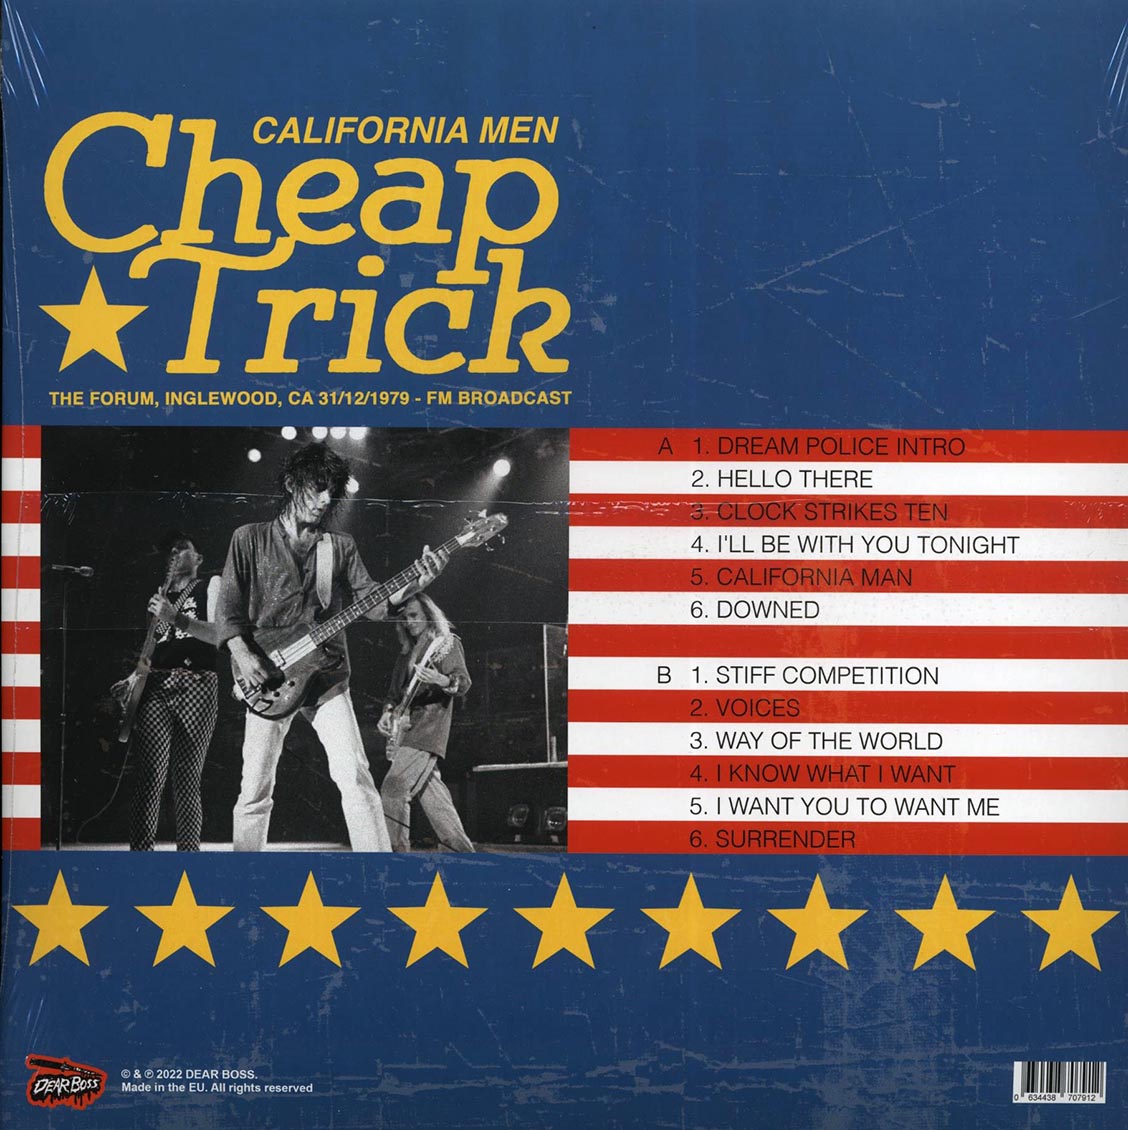 Cheap Trick - California Men: The Forum, Inglewood, CA 31/12/1979 FM Broadcast - Vinyl LP, LP